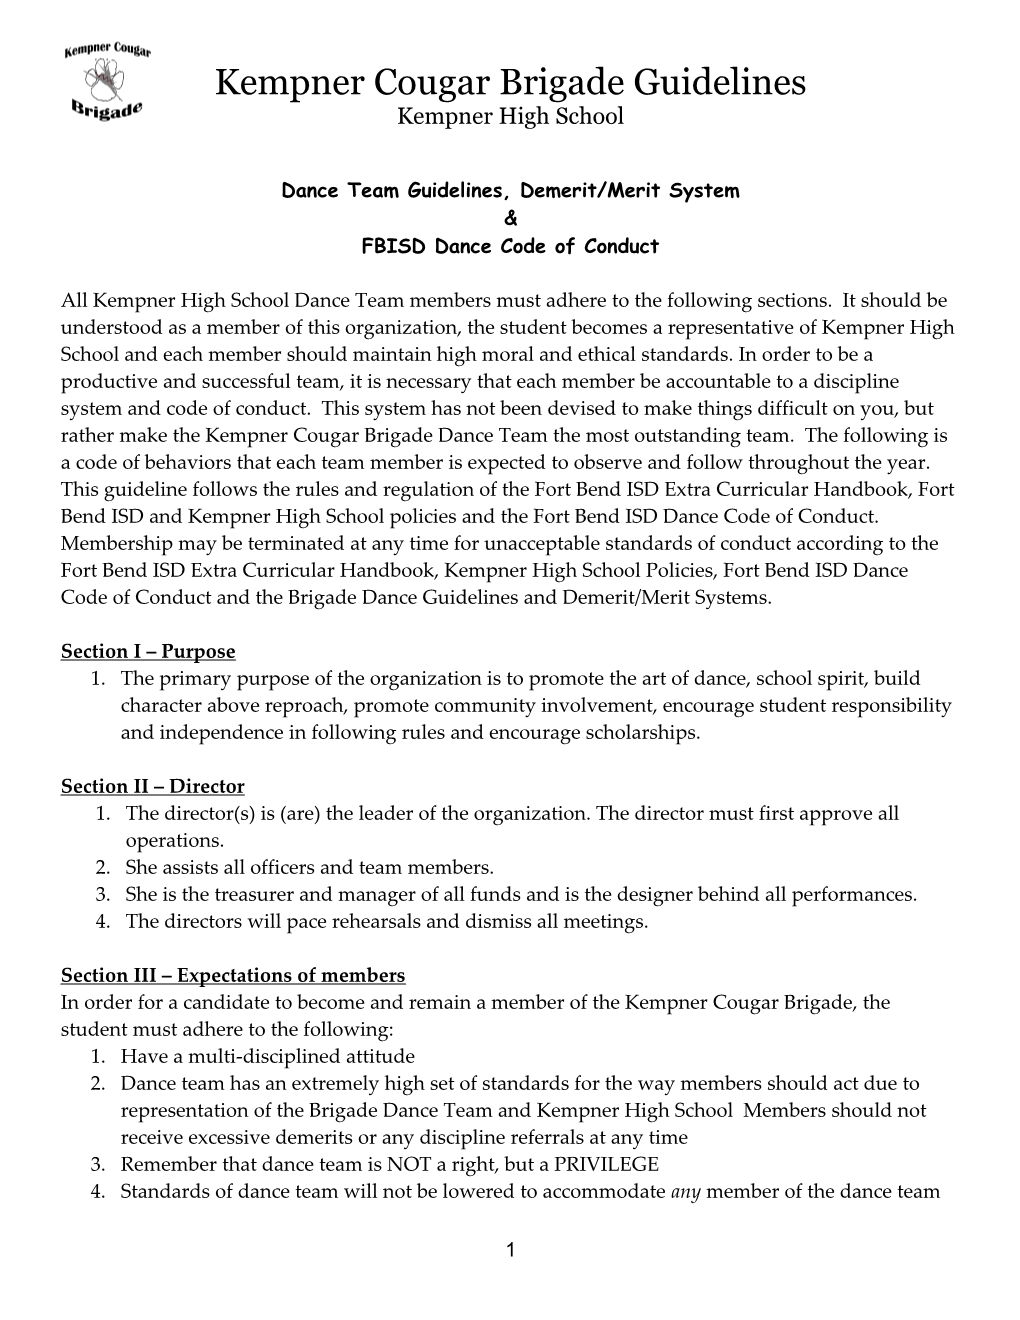 Dance Team Guidelines, Demerit/Merit System